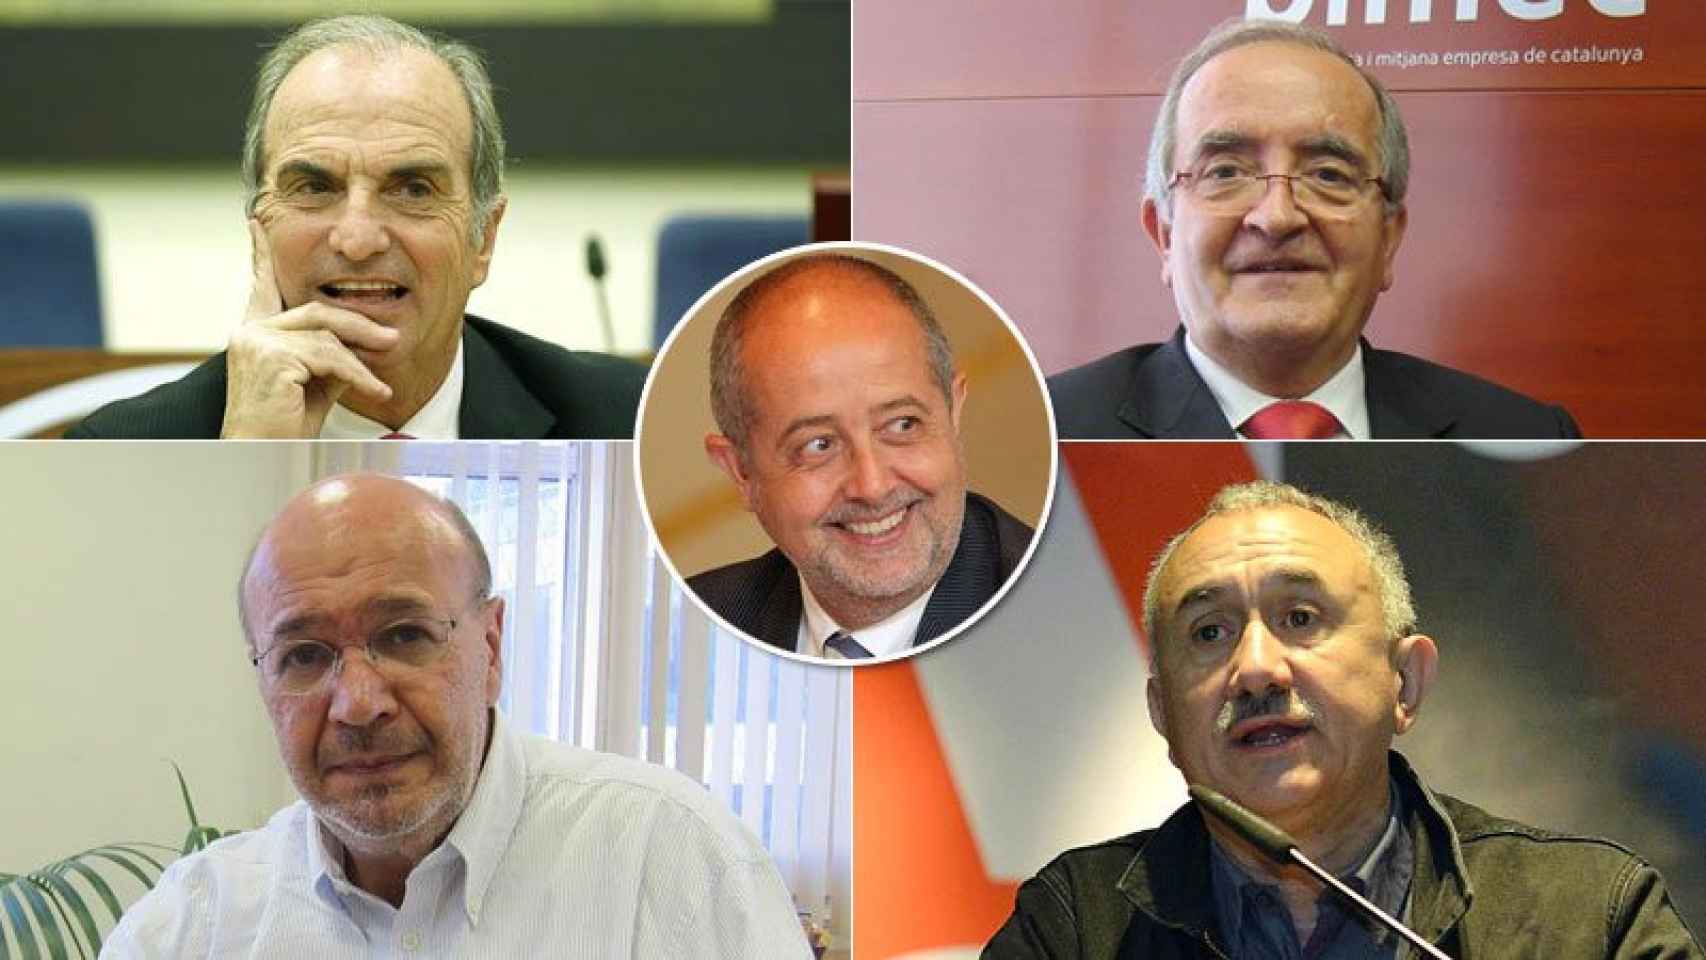 Joaquim Gay de Montellà (Foment), Josep González (Pimec), Joan Carles Gallego (CCOO), Pepe Álvarez (UGT) y Felip Puig, en el centro.